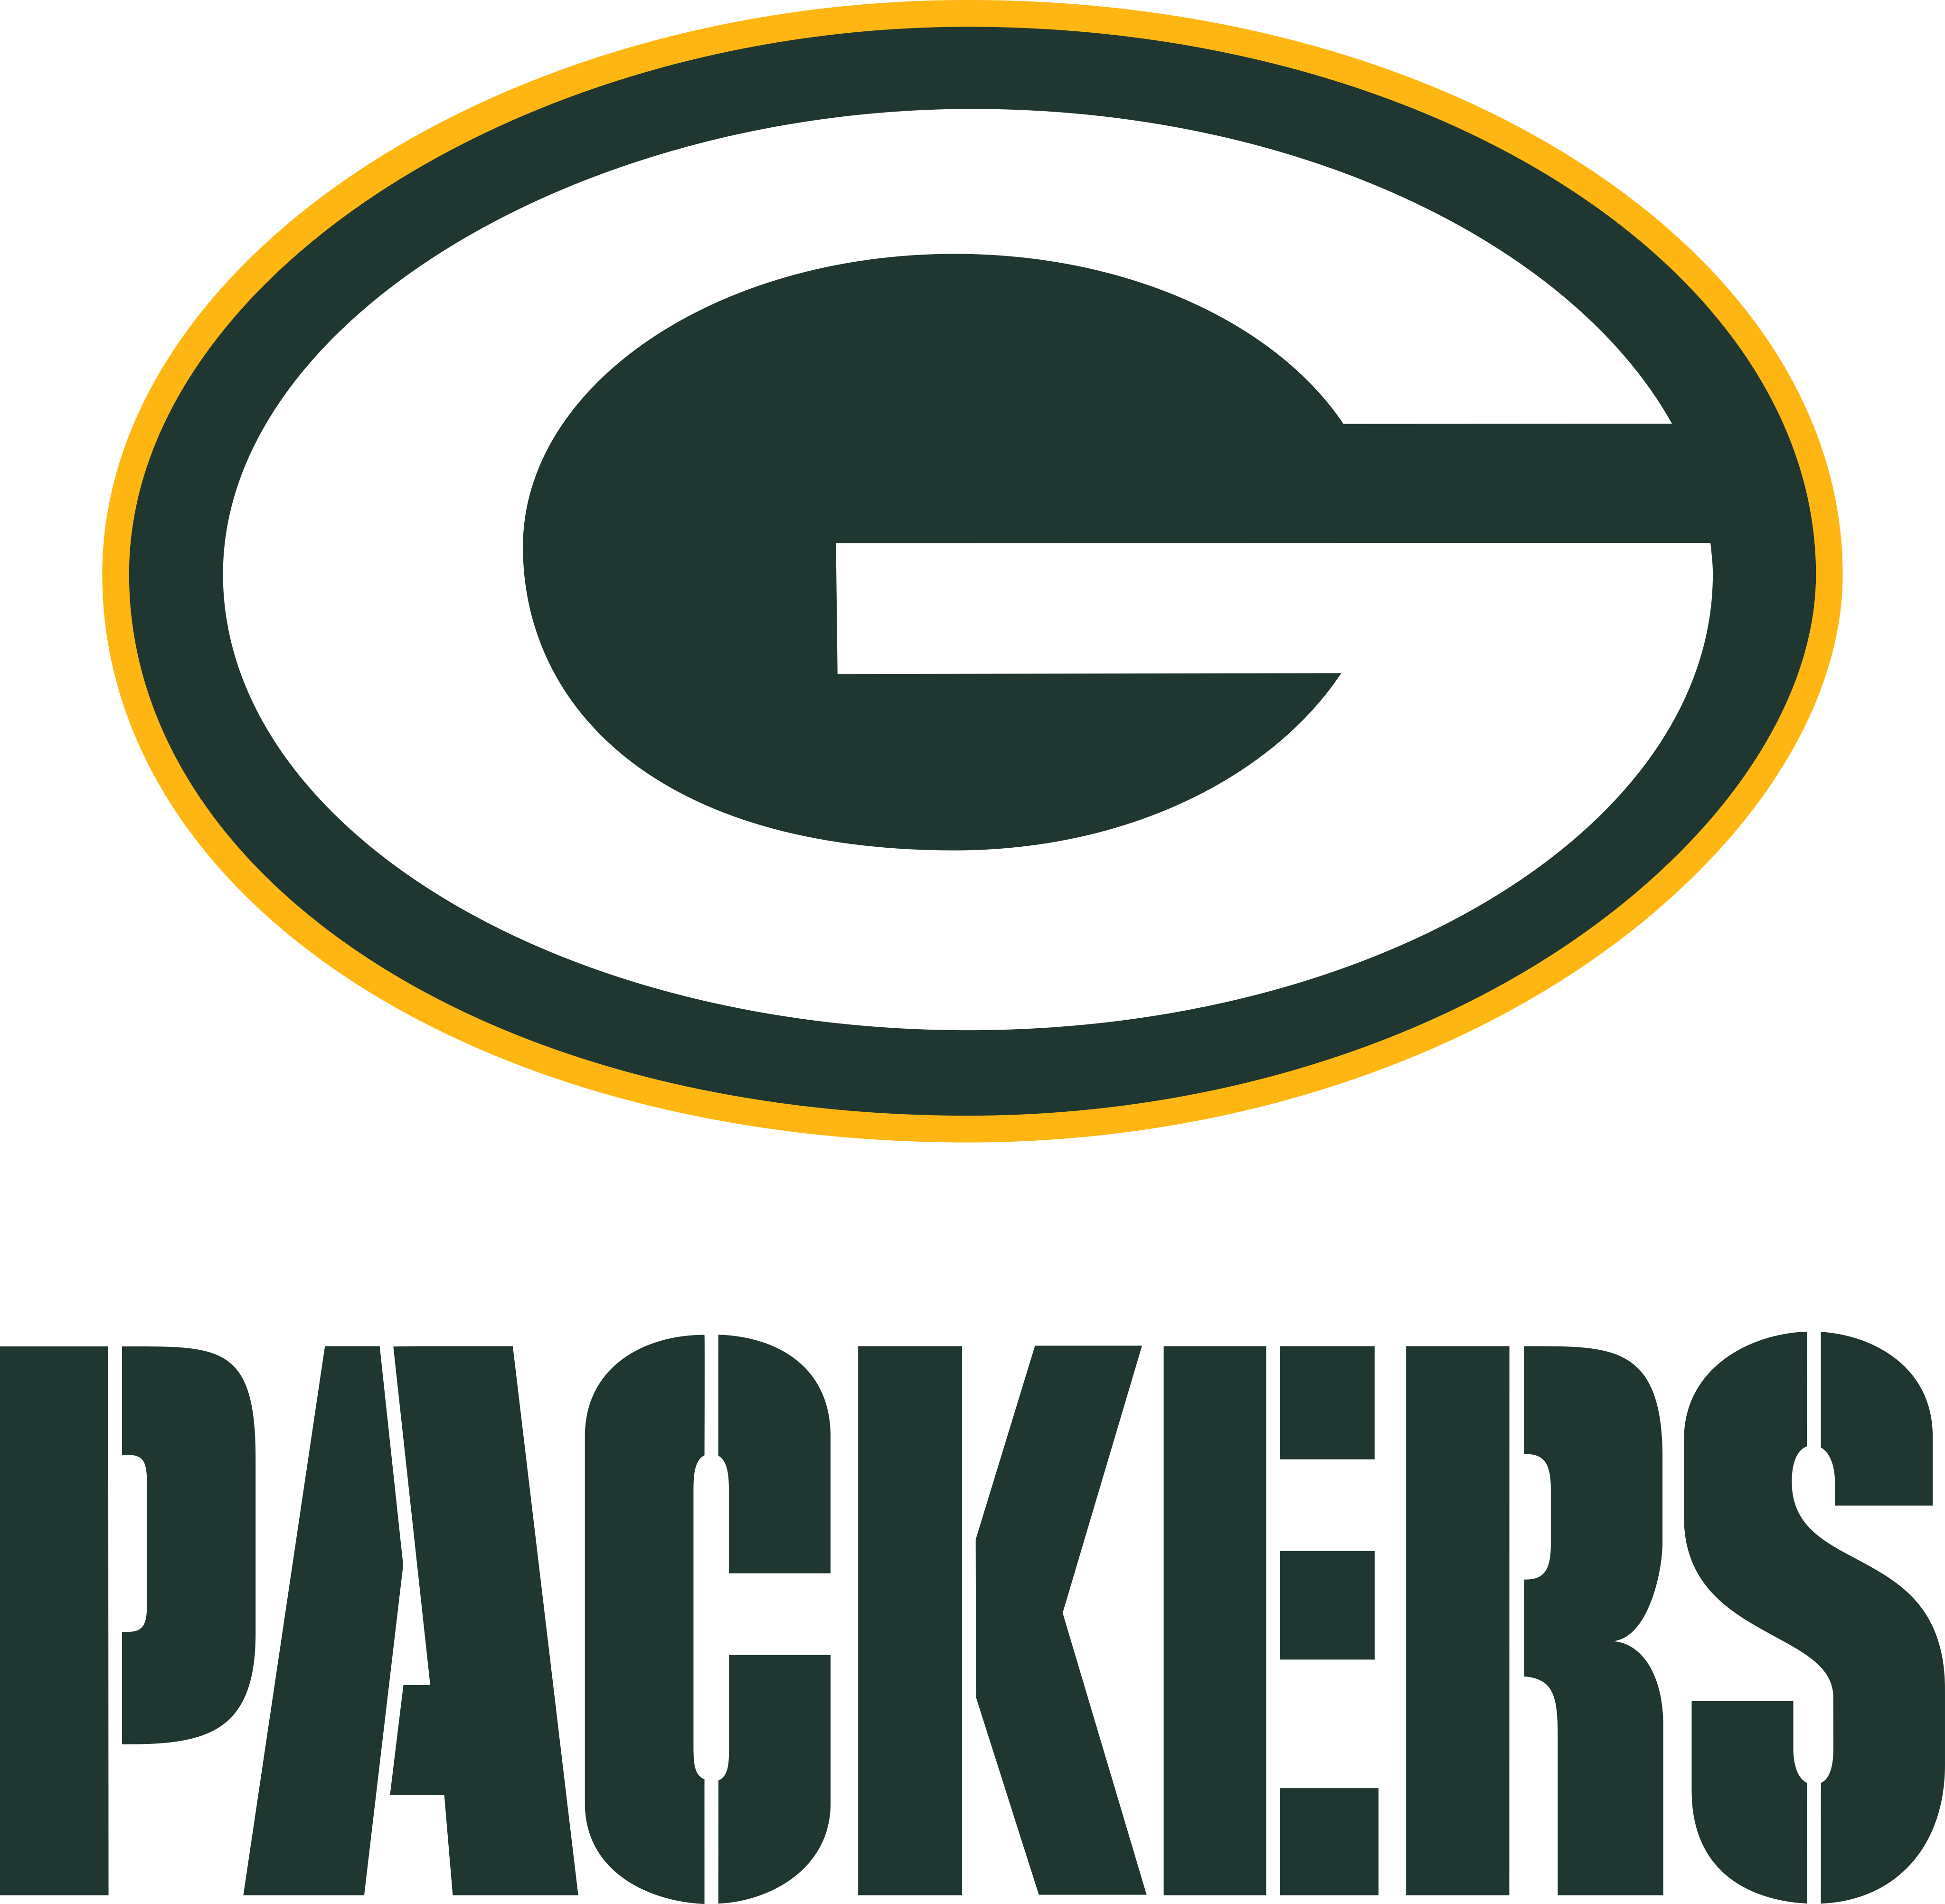 Green Bay Packers Logo.